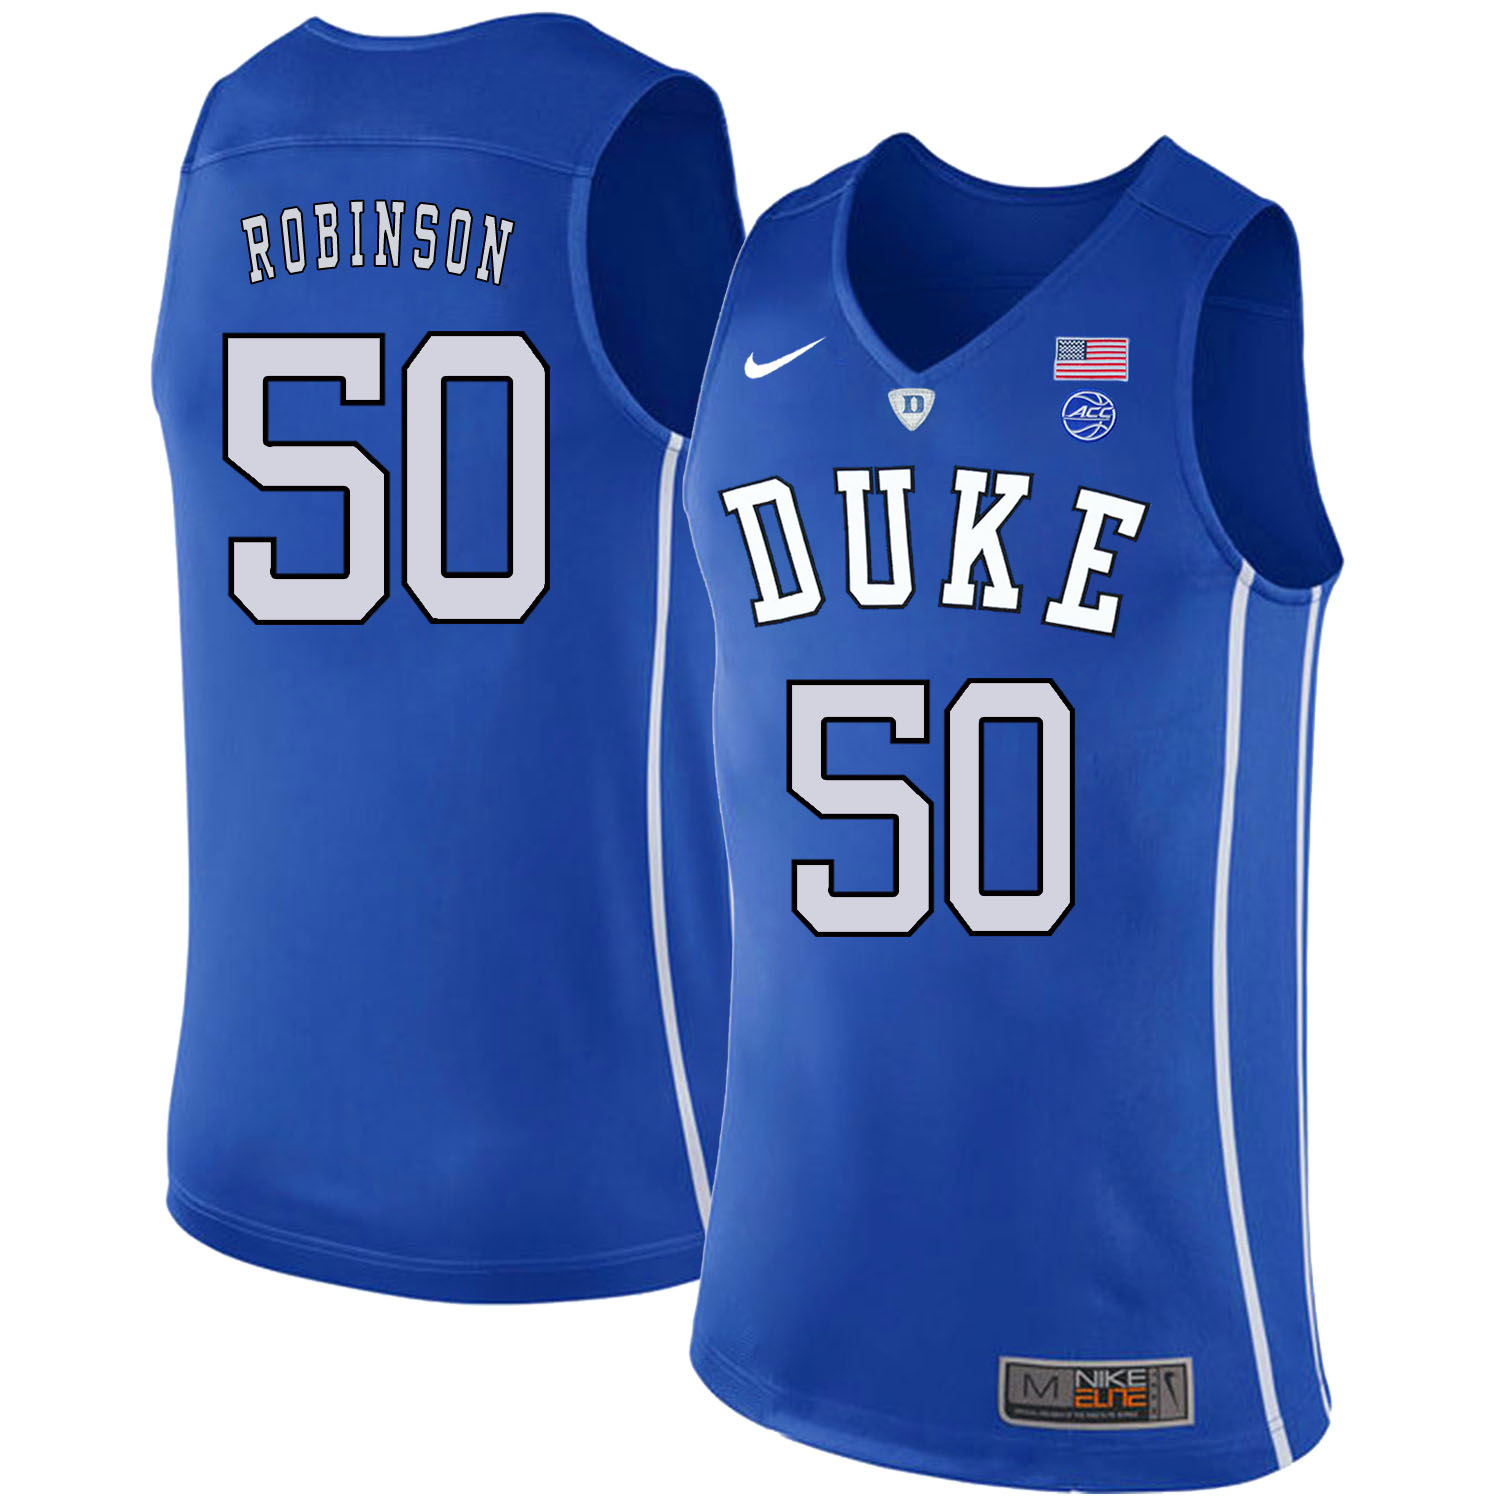 Duke Blue Devils 50 Justin Robinson Blue Nike College Basketball Jersey